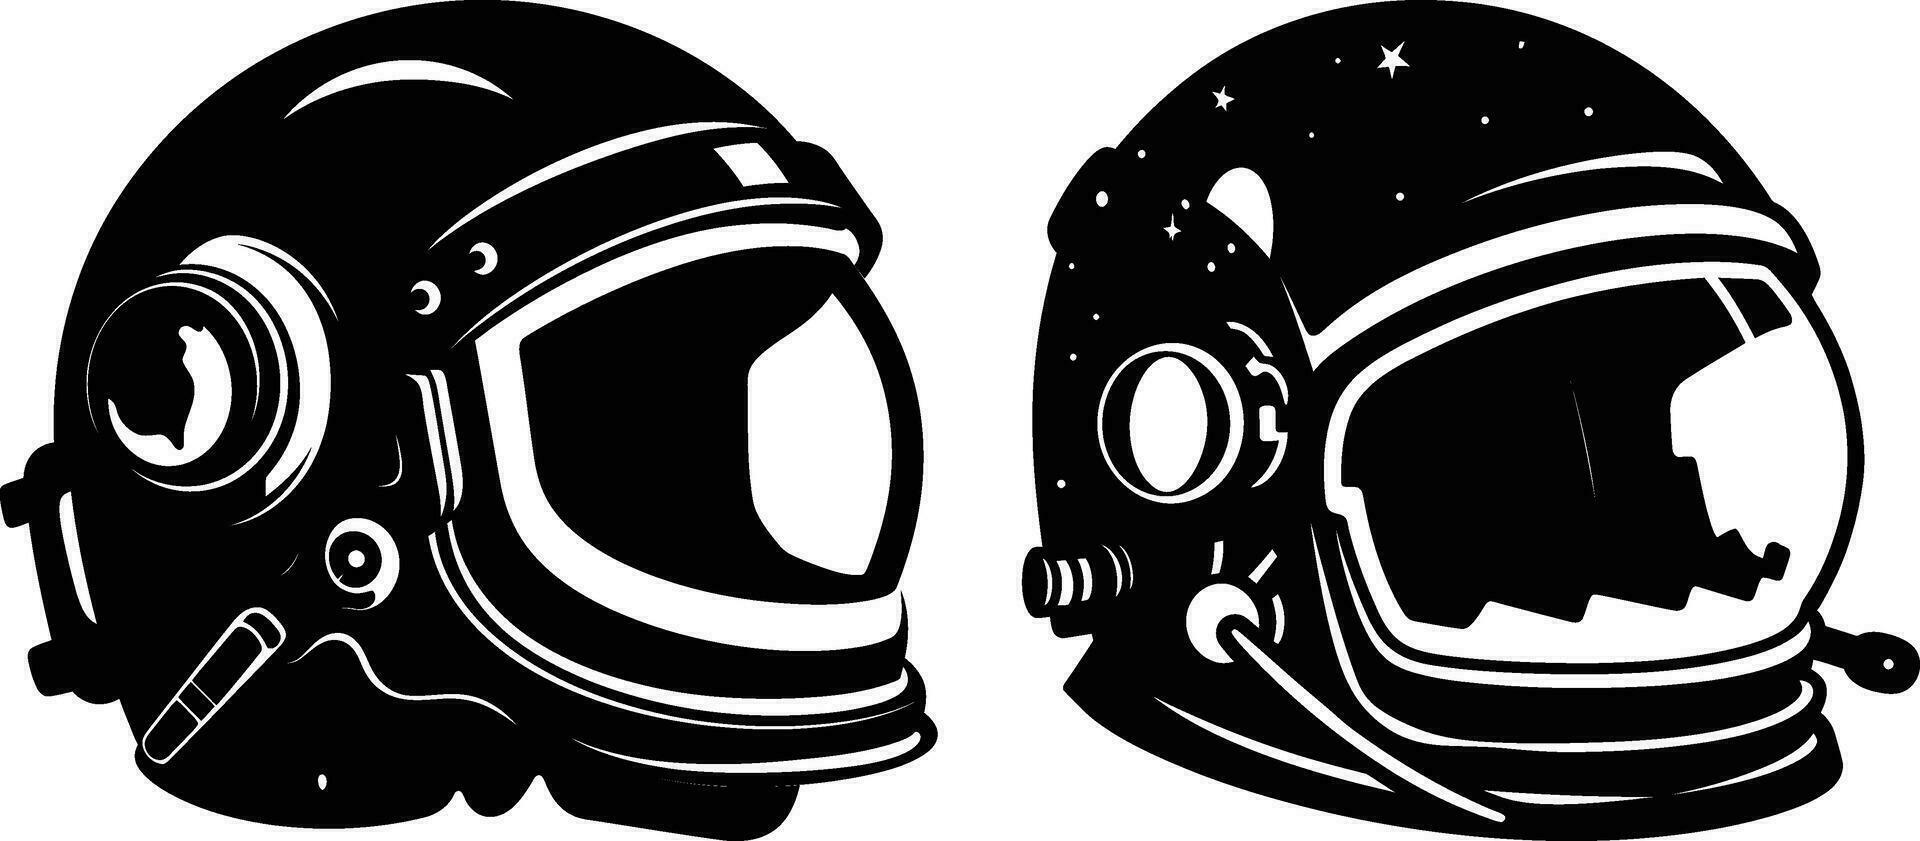 Celestial Elegance  Astronaut Helmet Silhouette vector